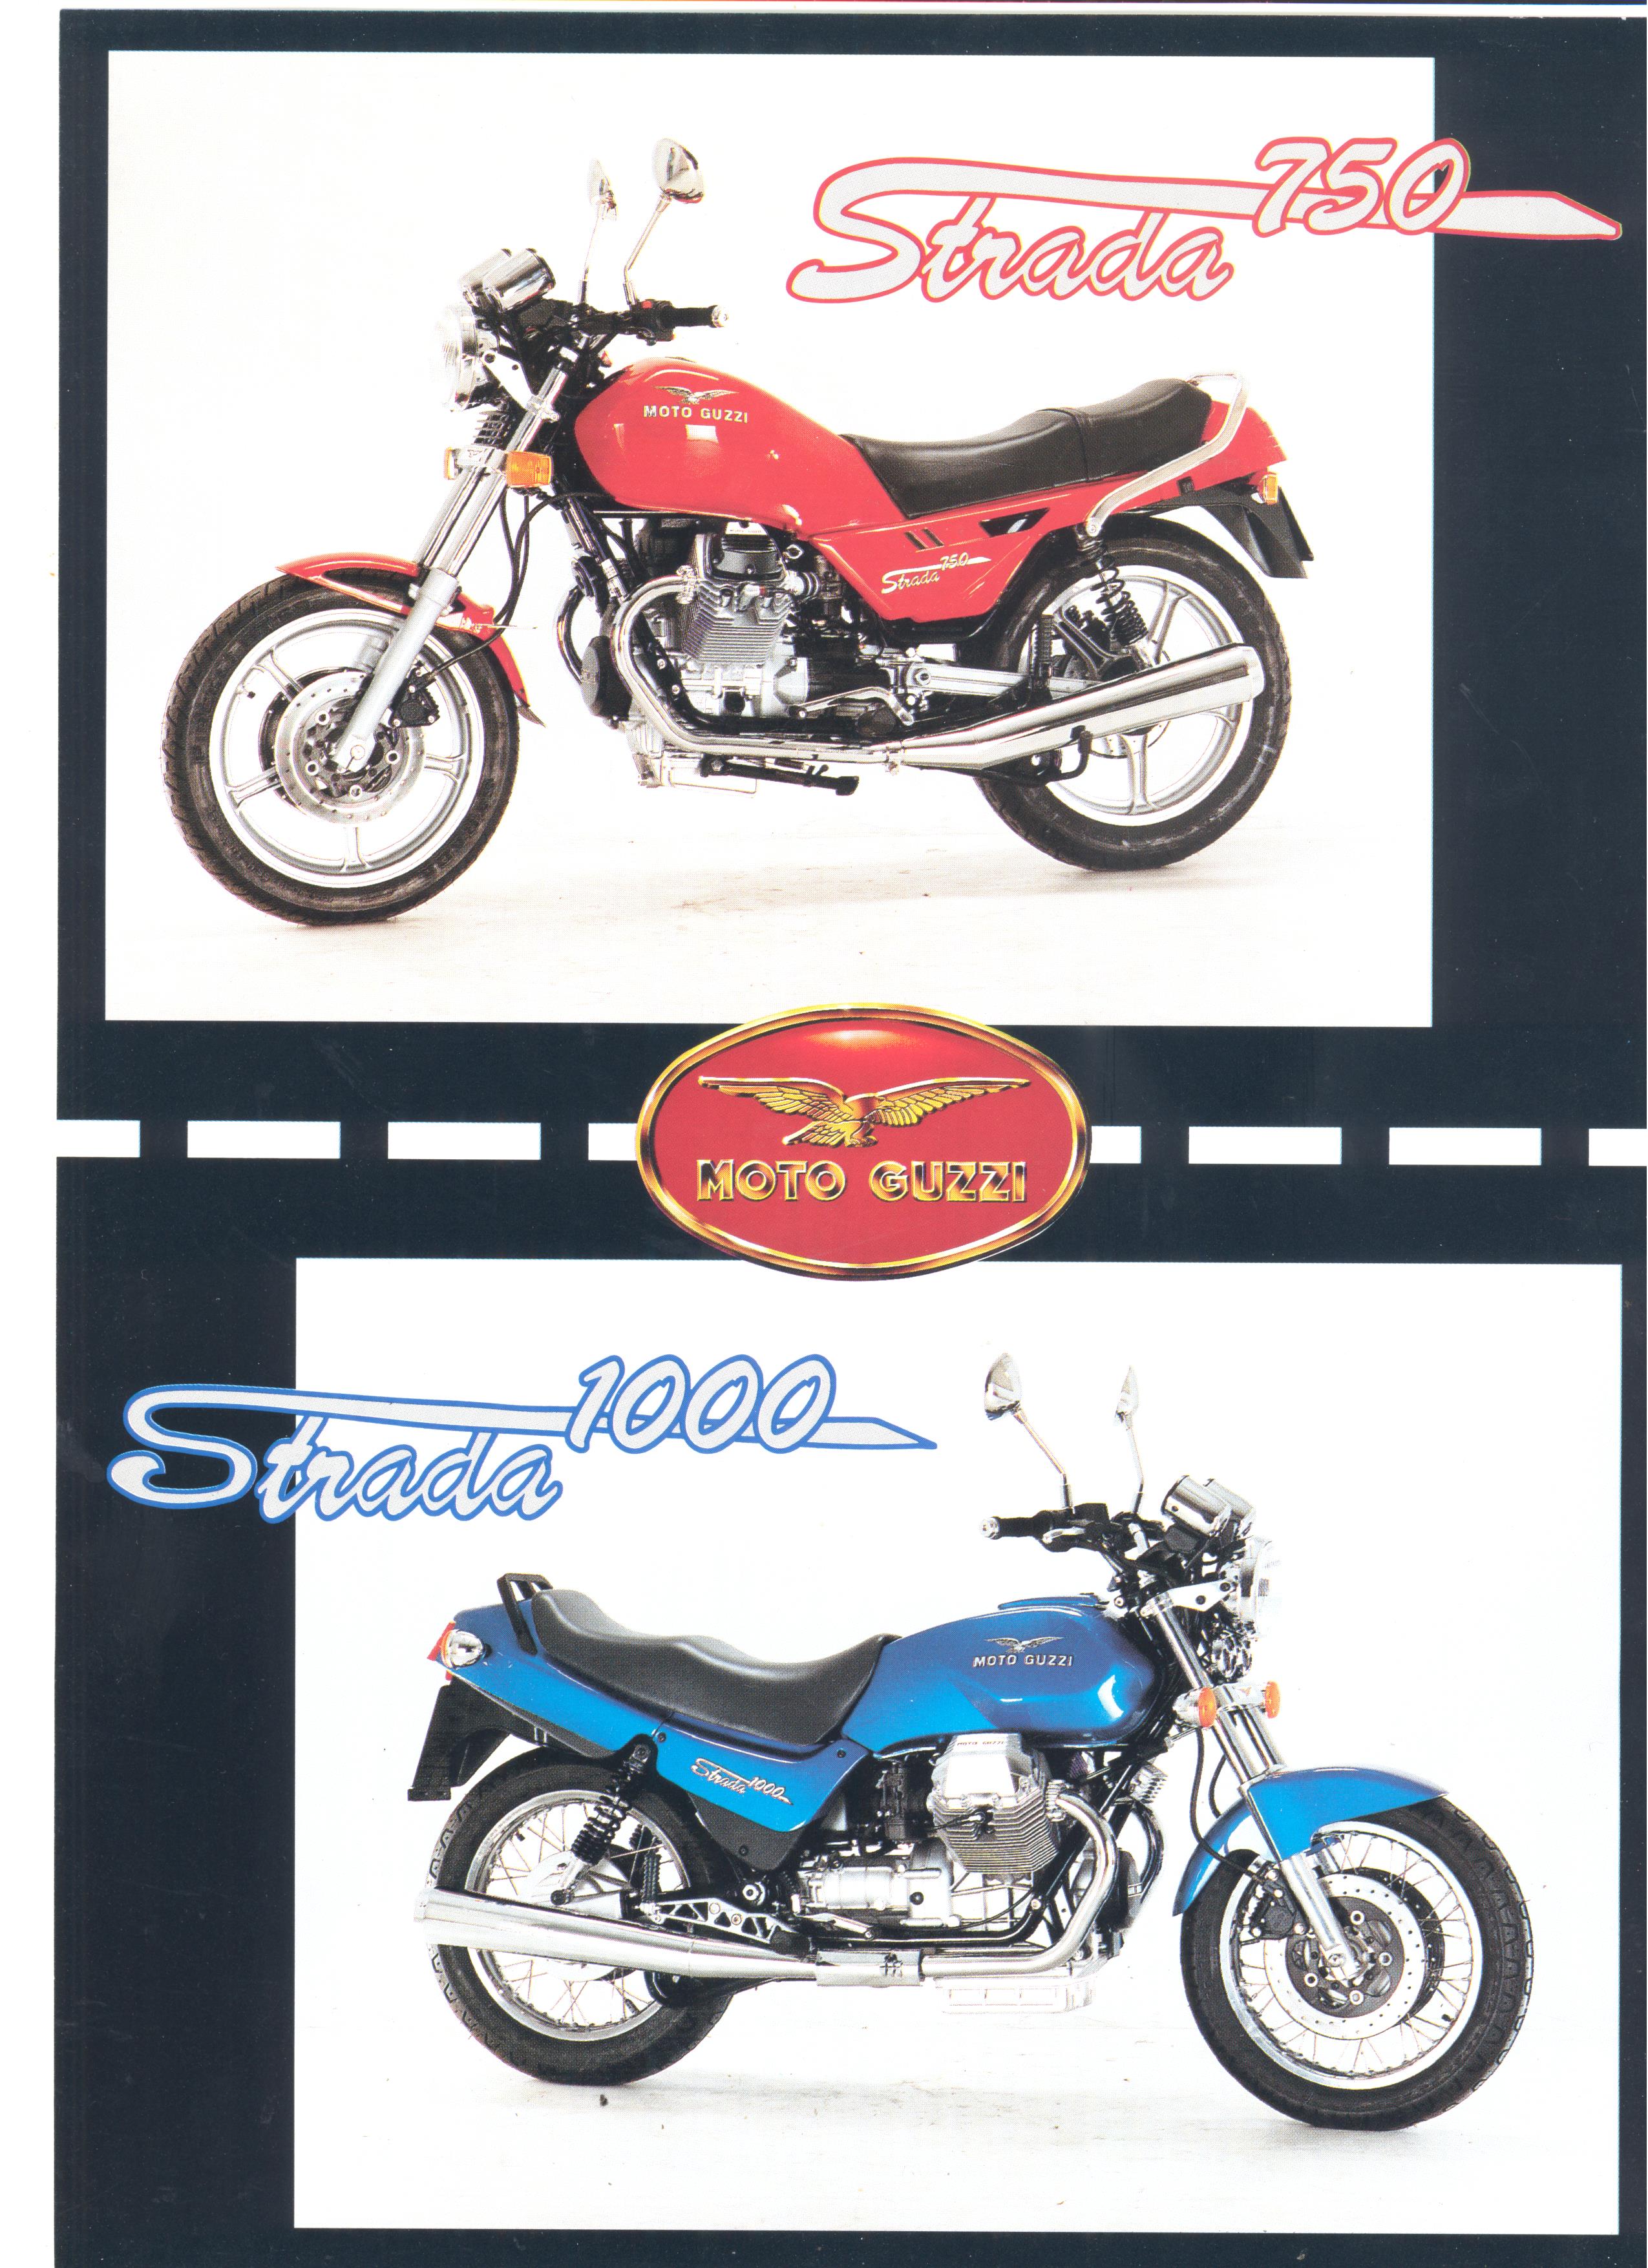 Moto Guzzi factory brochure: Strada 750 - 1000